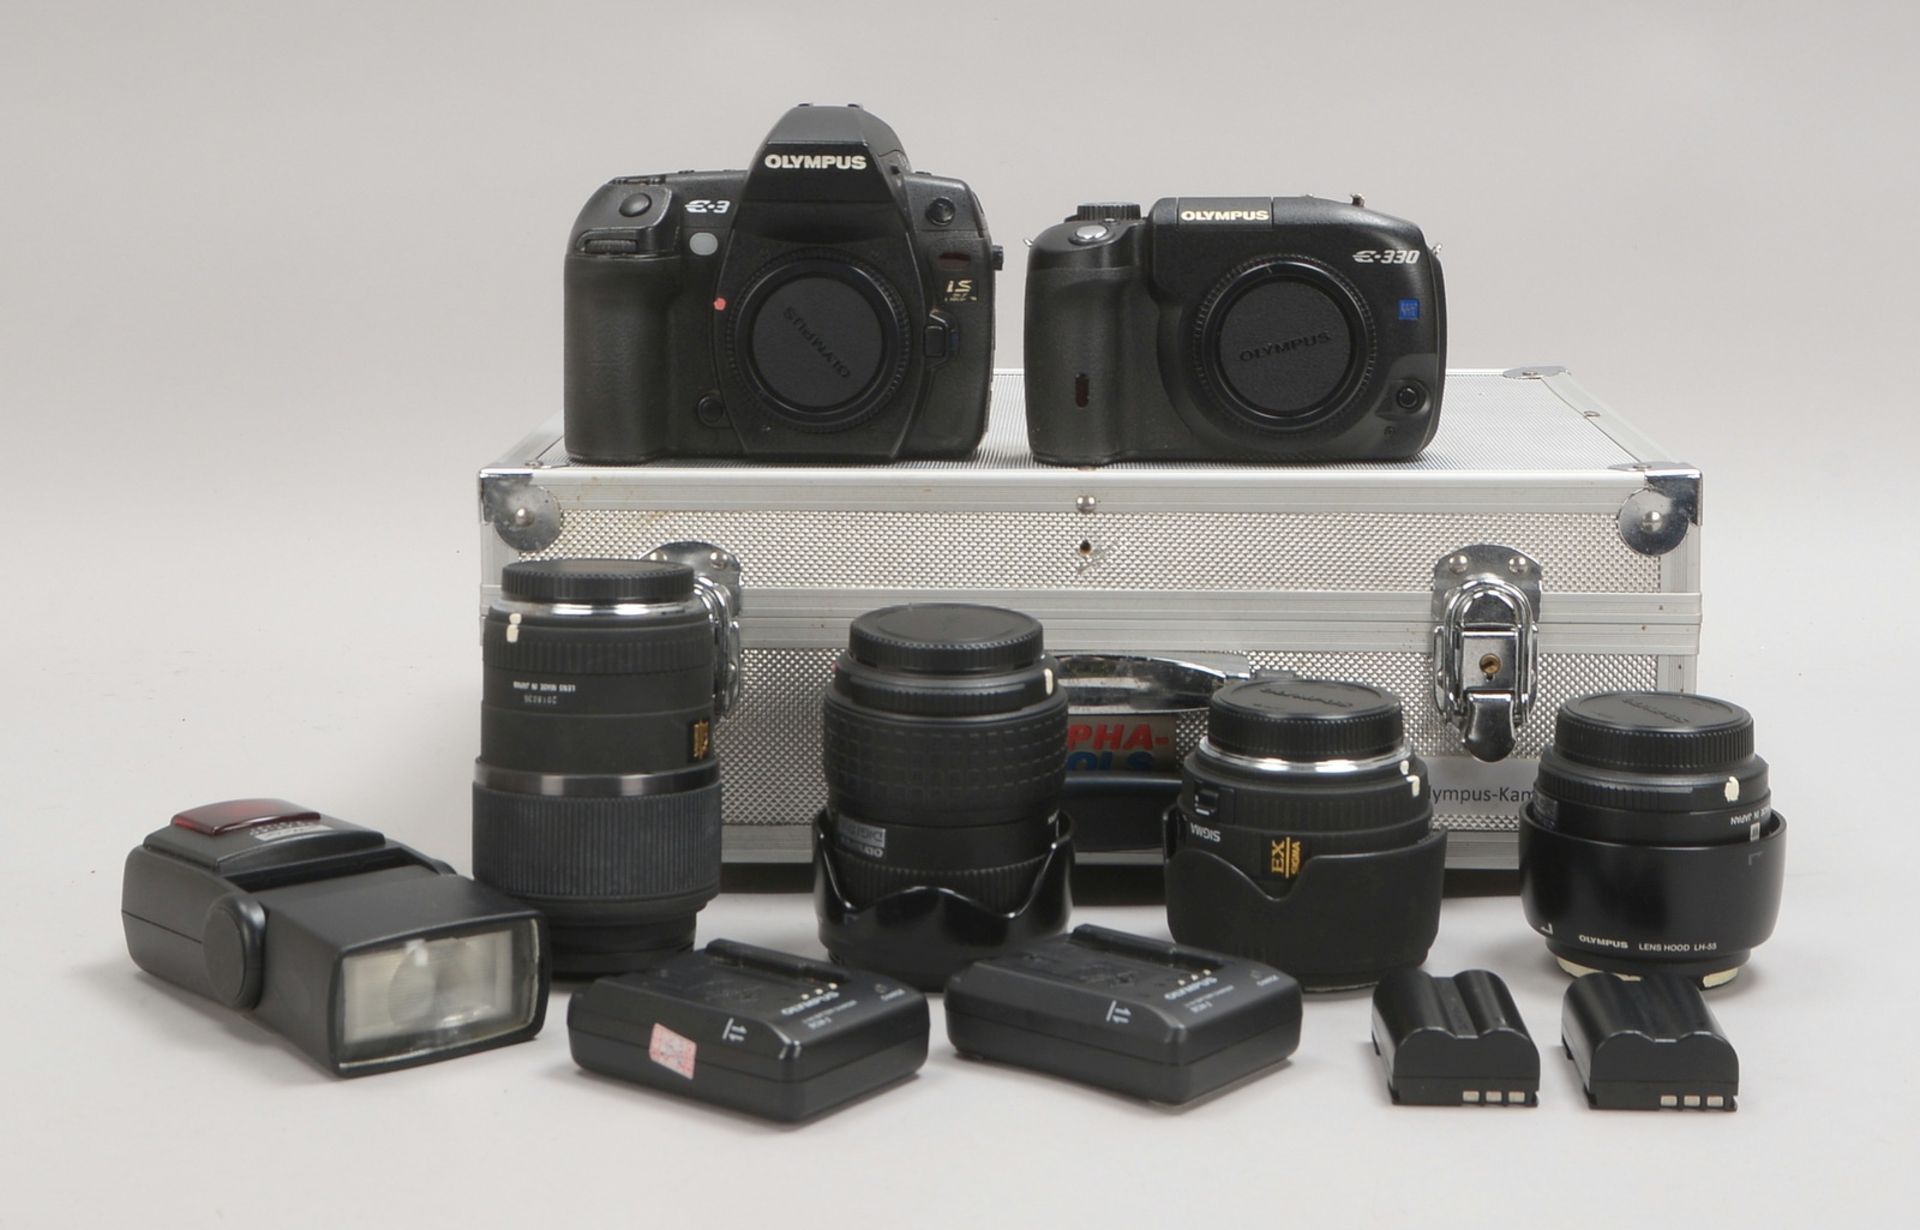 Kamera-Zub., Olympus: 4x Objektive, 2x Kamera-Bodys, Ladeger&auml;te/Akkus, Blitz - gepr.